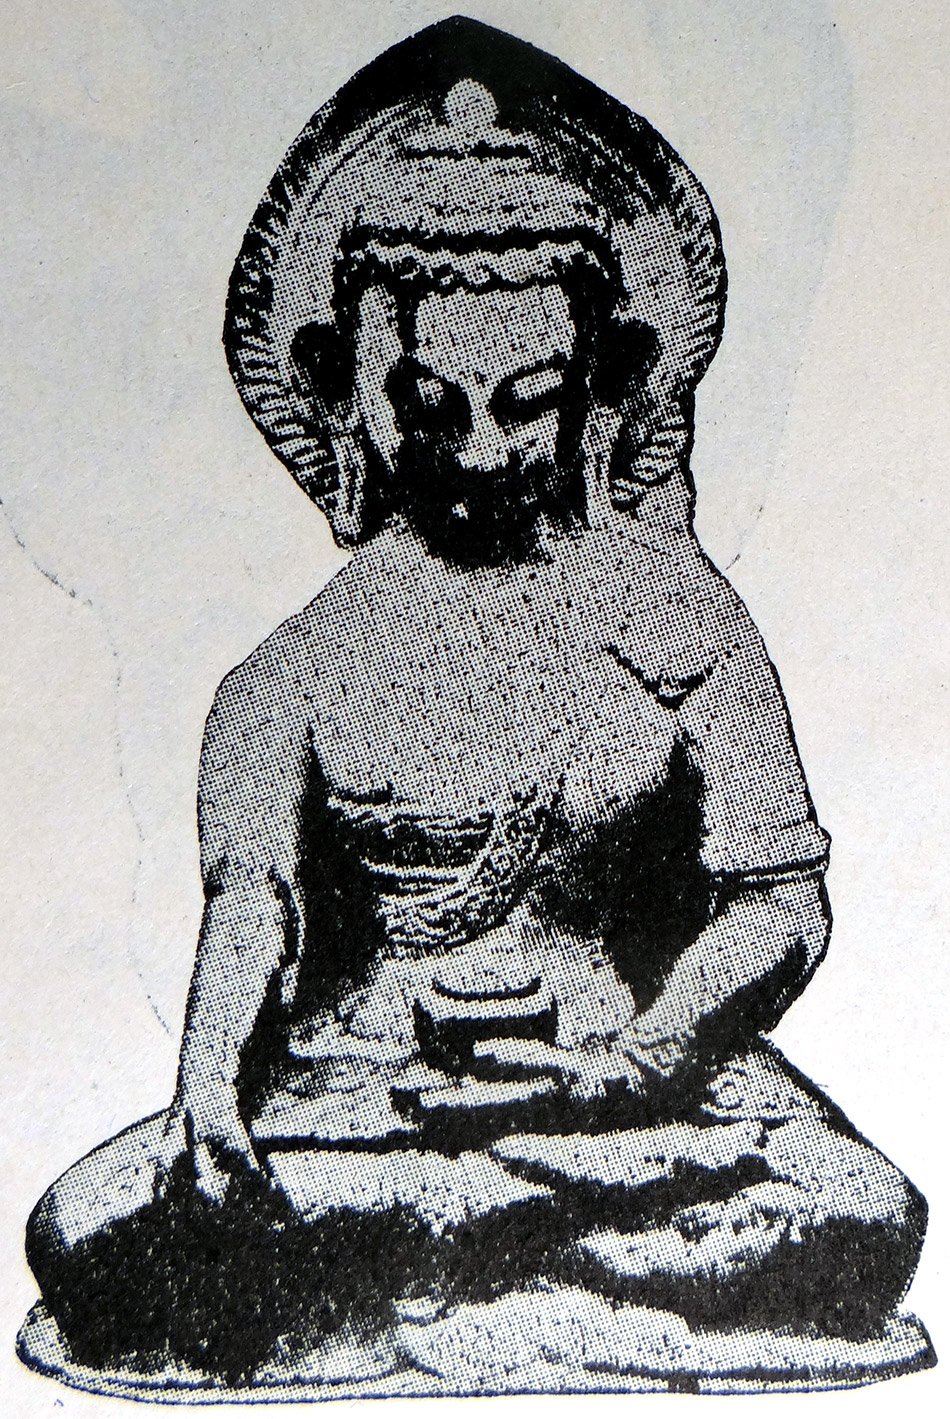 Ratnasambhava